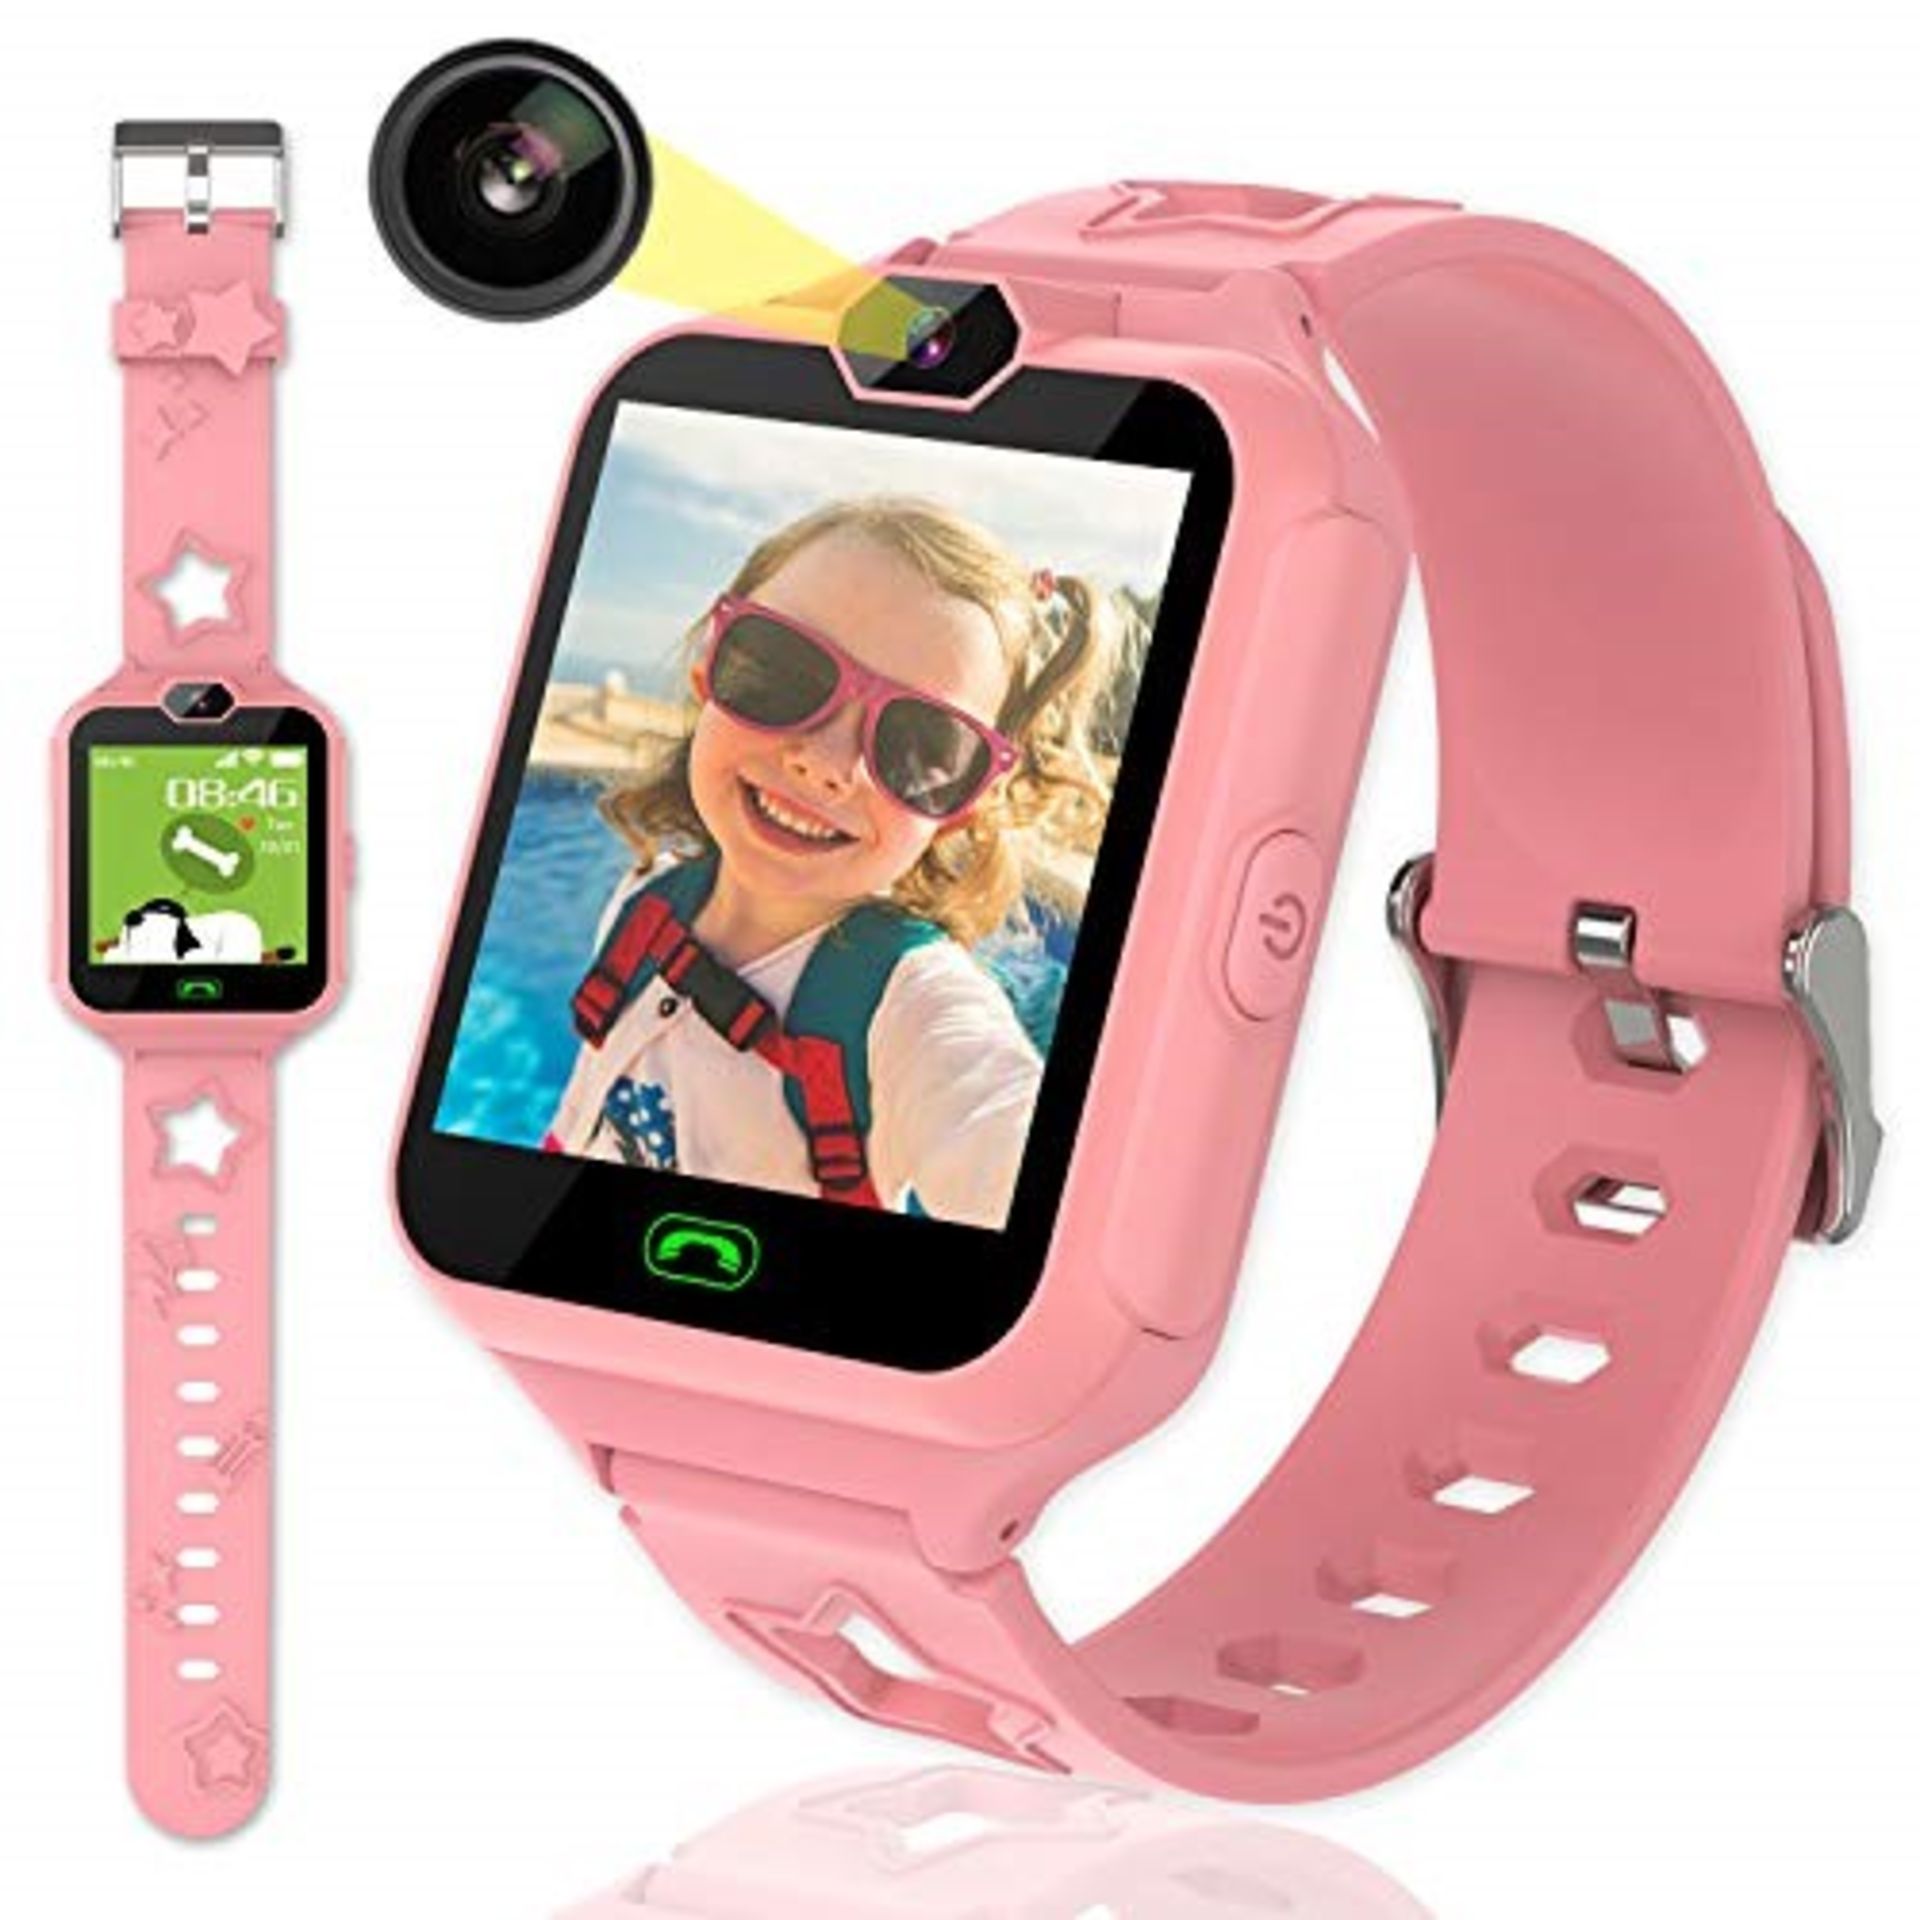 FRLONE Kids Smart Watch for Girls Boys - Children's Smartwatch Phone with 7 Games Musi